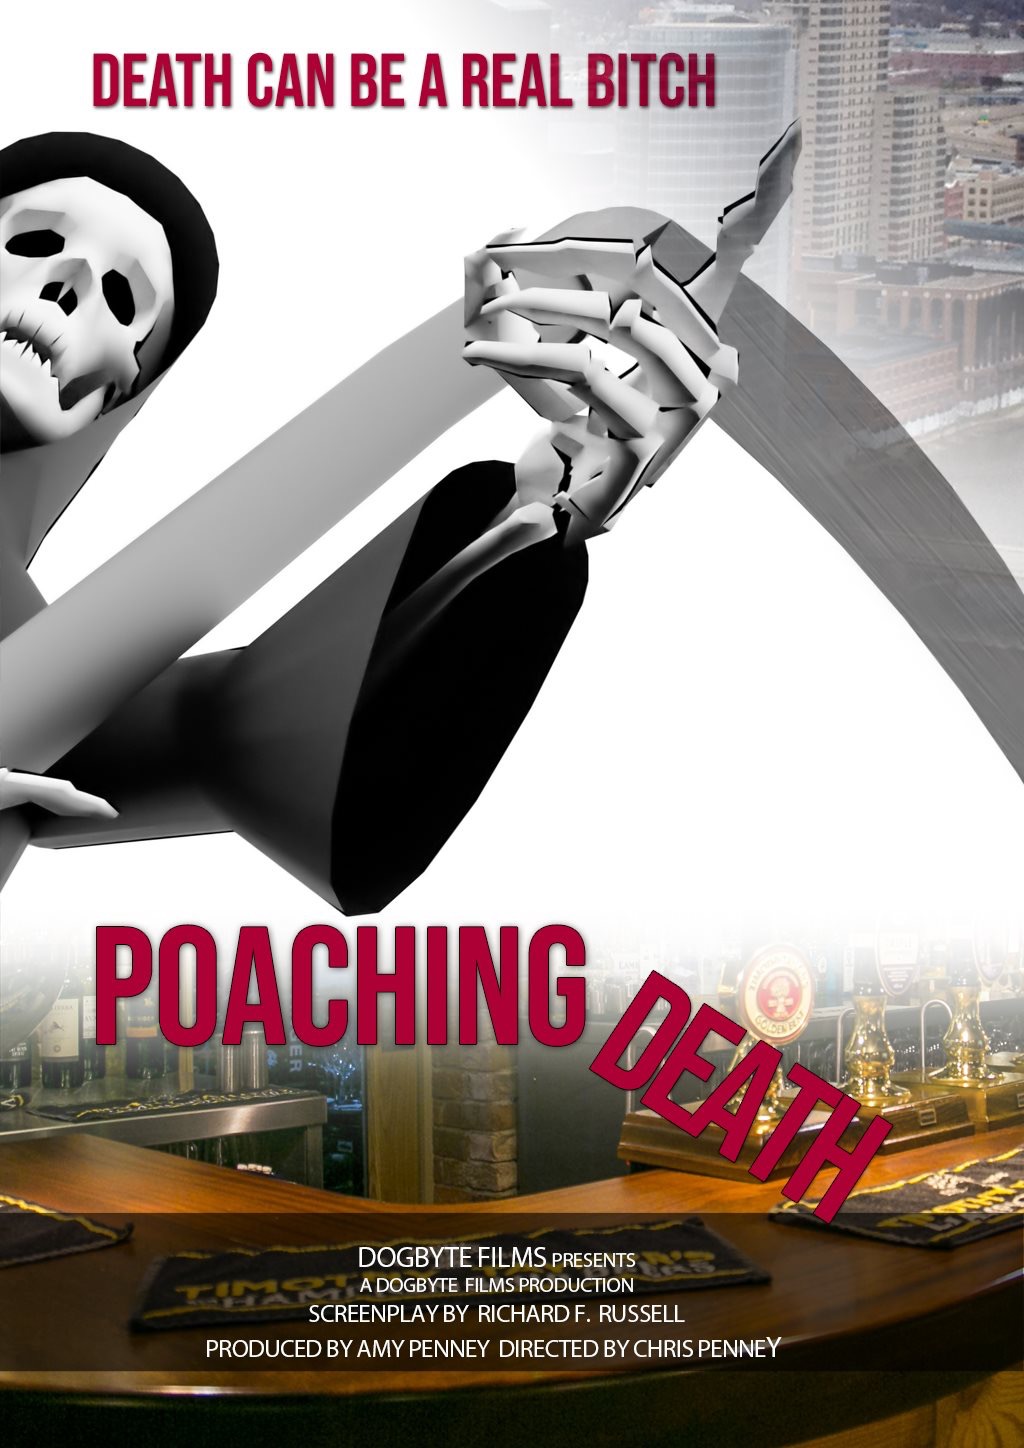 Poaching Death